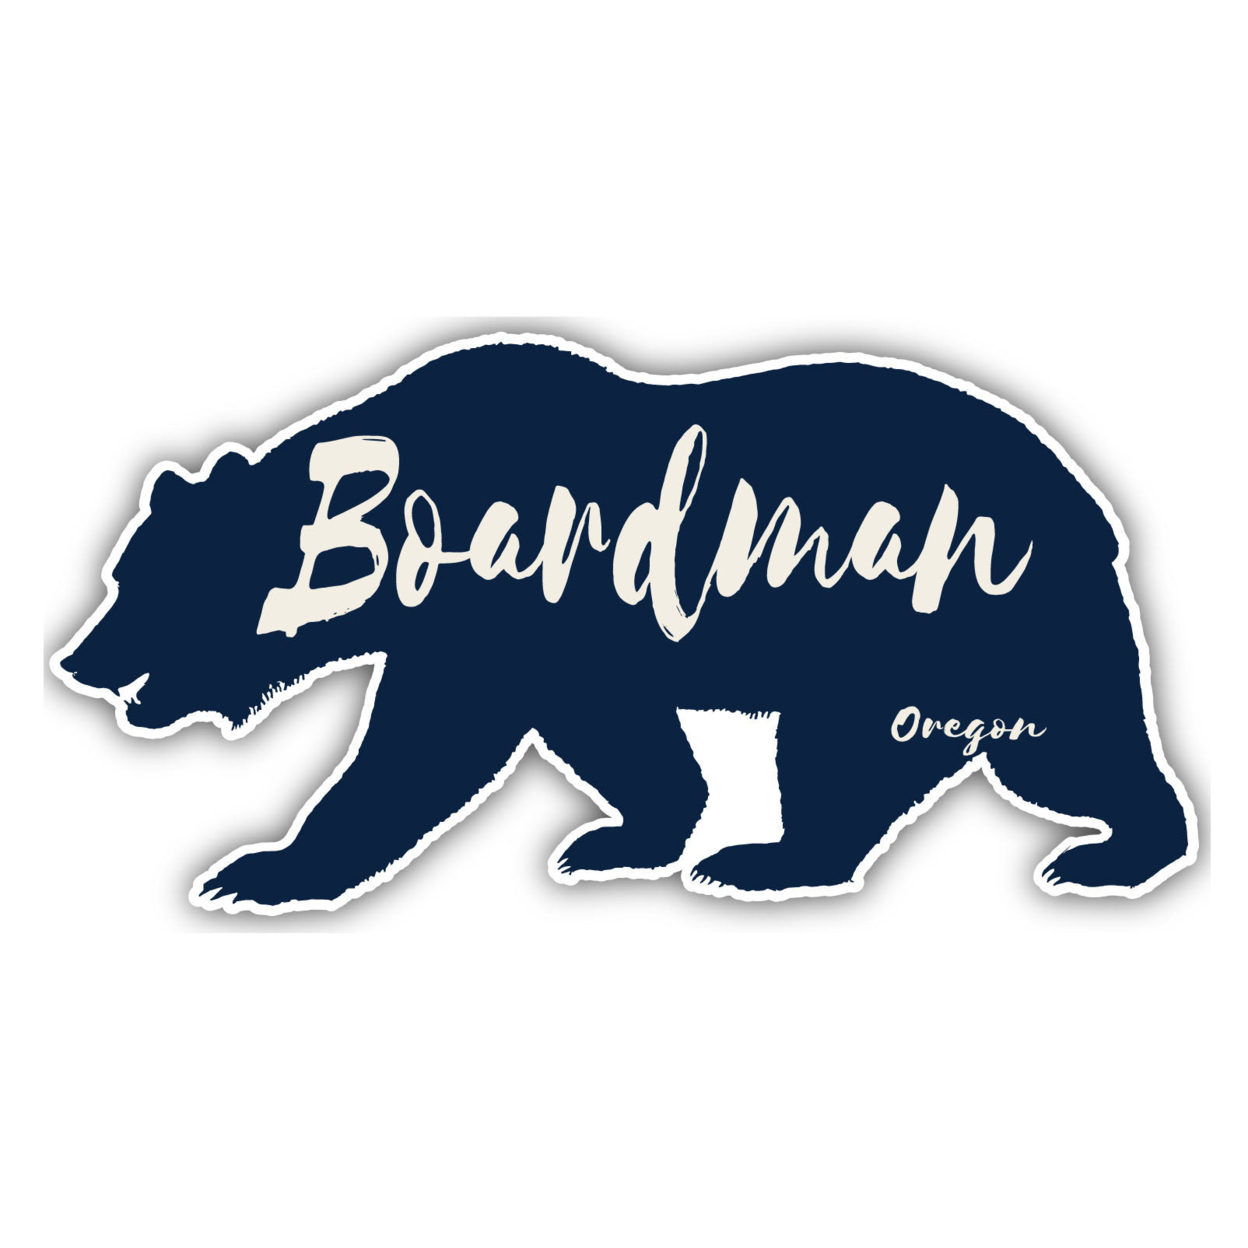 Boardman Oregon Souvenir Decorative Stickers (Choose Theme And Size) - Single Unit, 2-Inch, Tent